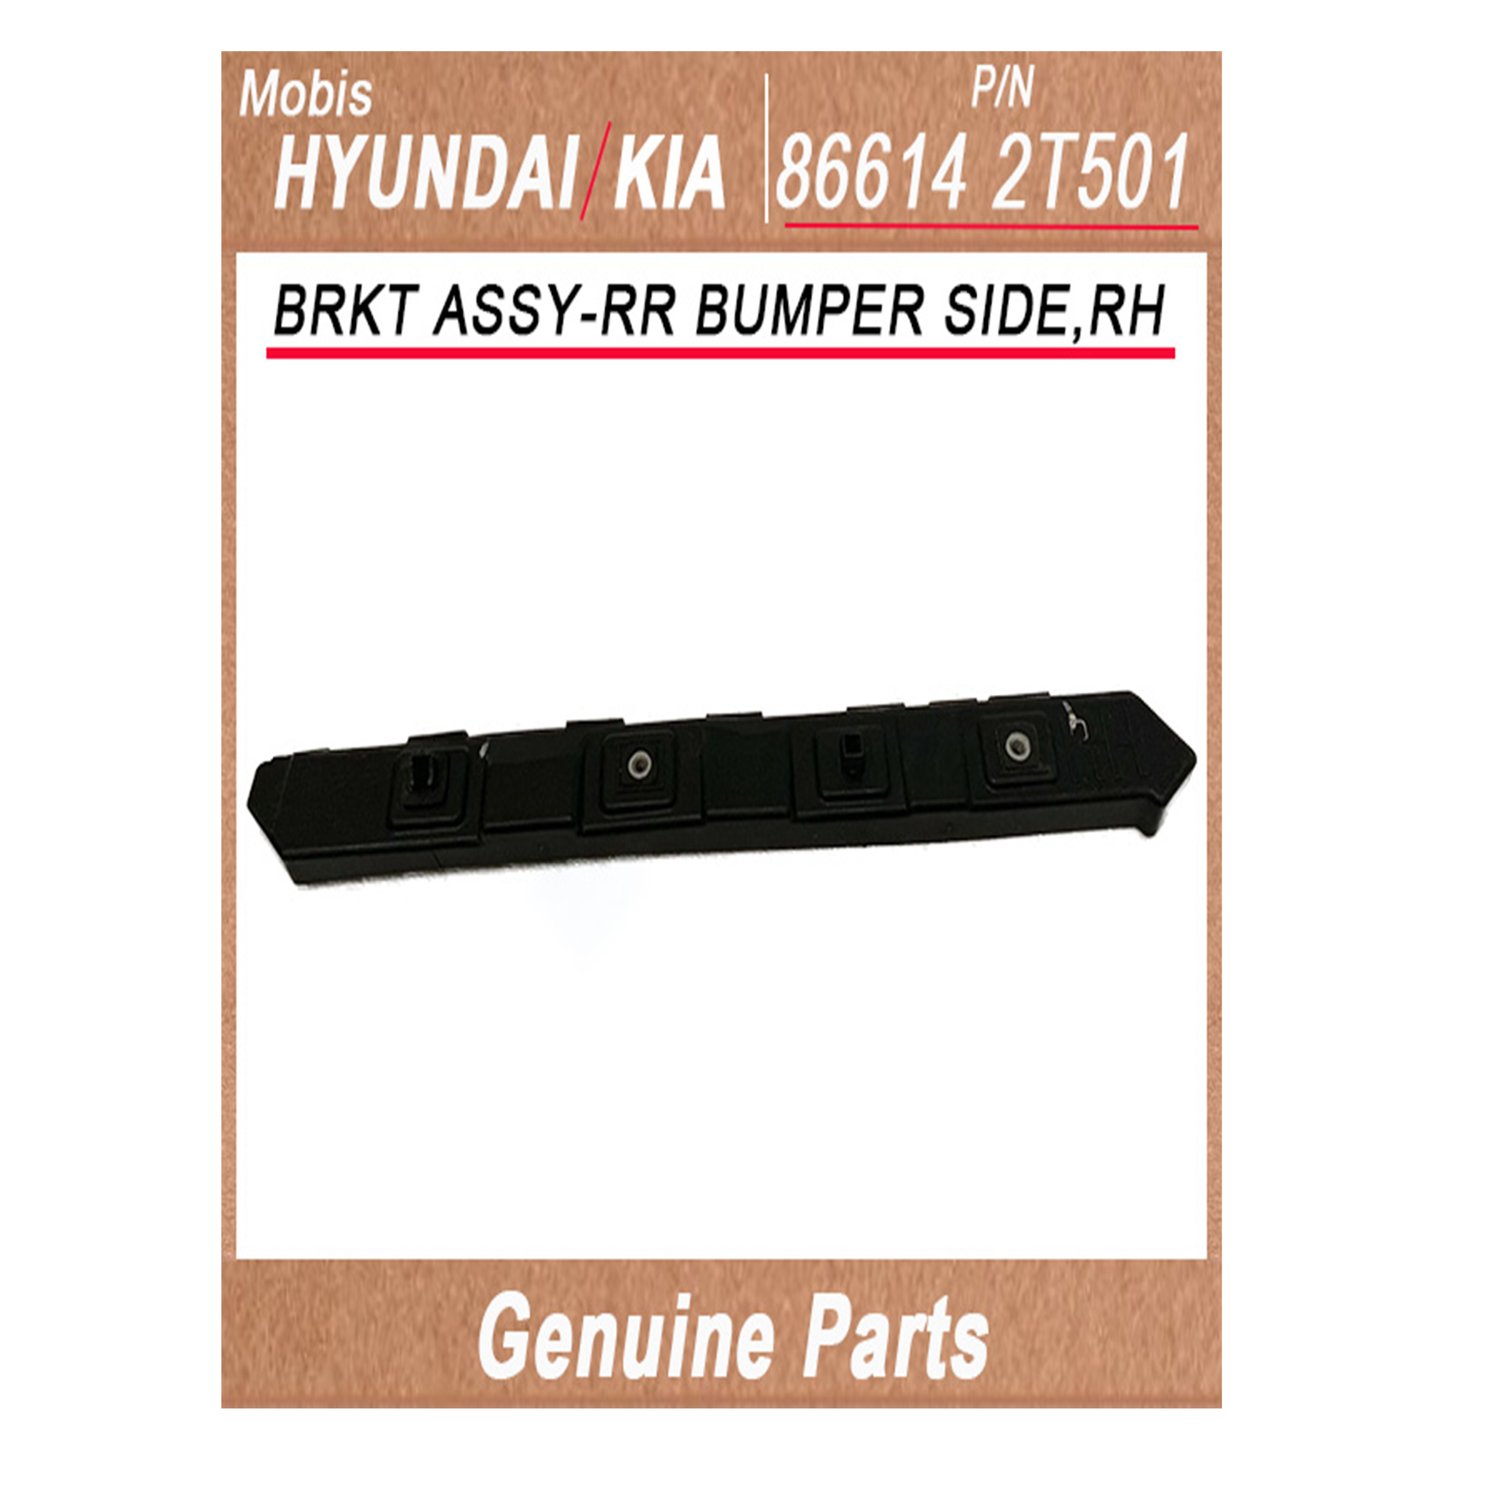 866142T501 _ BRKT ASSY_RR BUMPER SIDE_RH _ Genuine Korean Automotive Spare Parts _ Hyundai Kia _Mobi